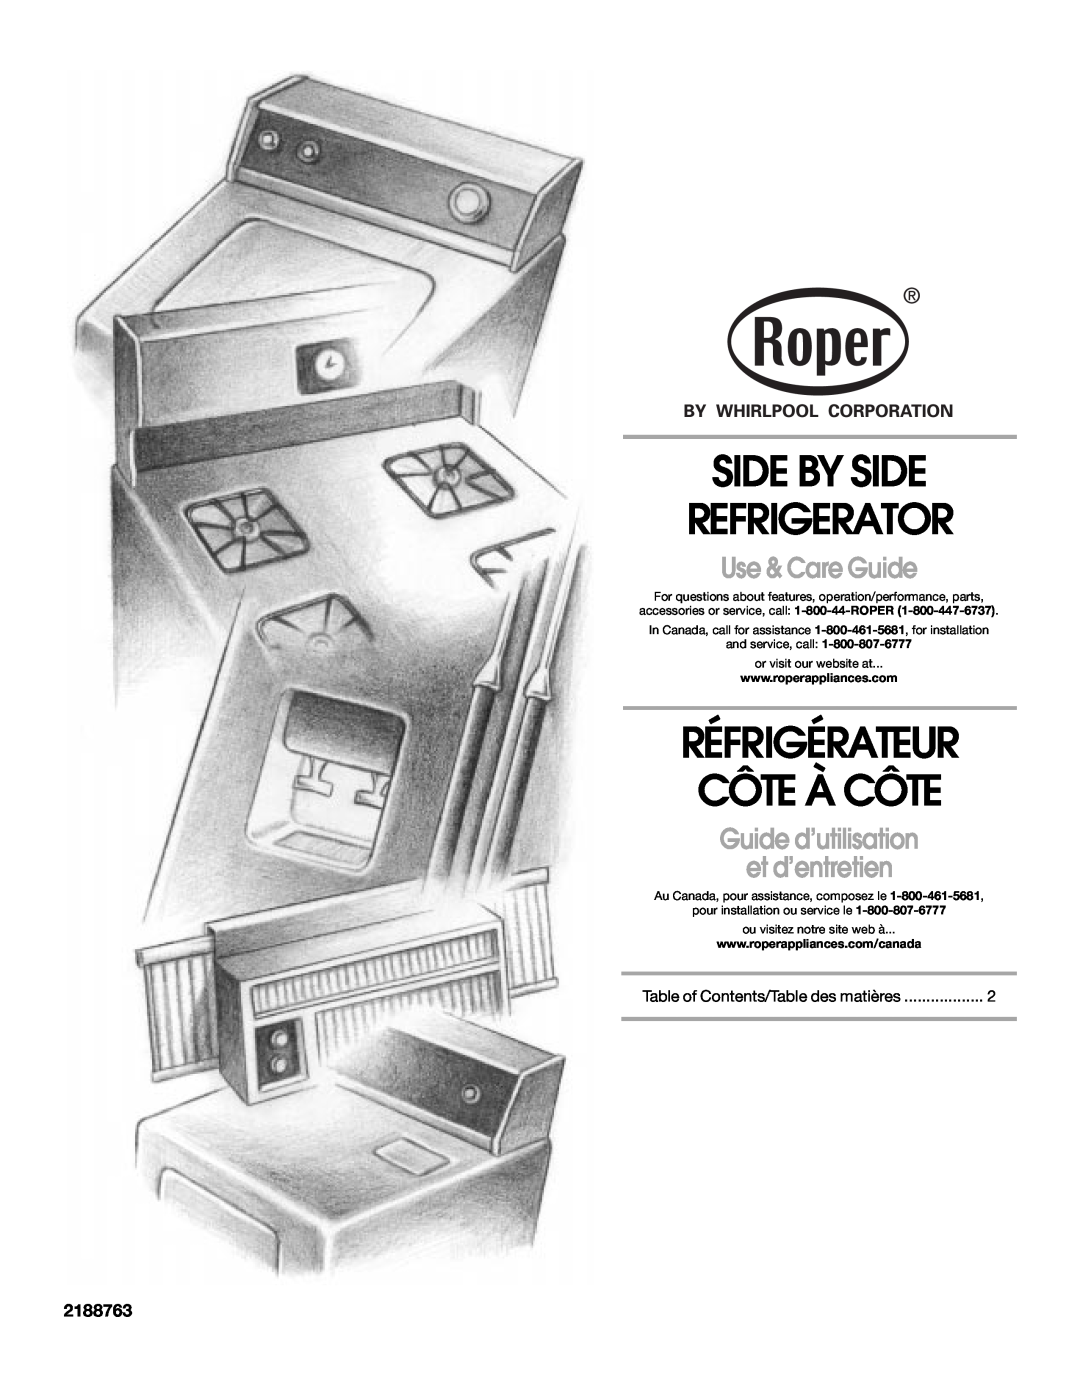 Whirlpool RS22AQXKQ02 manual Side By Side Refrigerator, Réfrigérateur Côte À Côte, Use & Care Guide, 2188763 